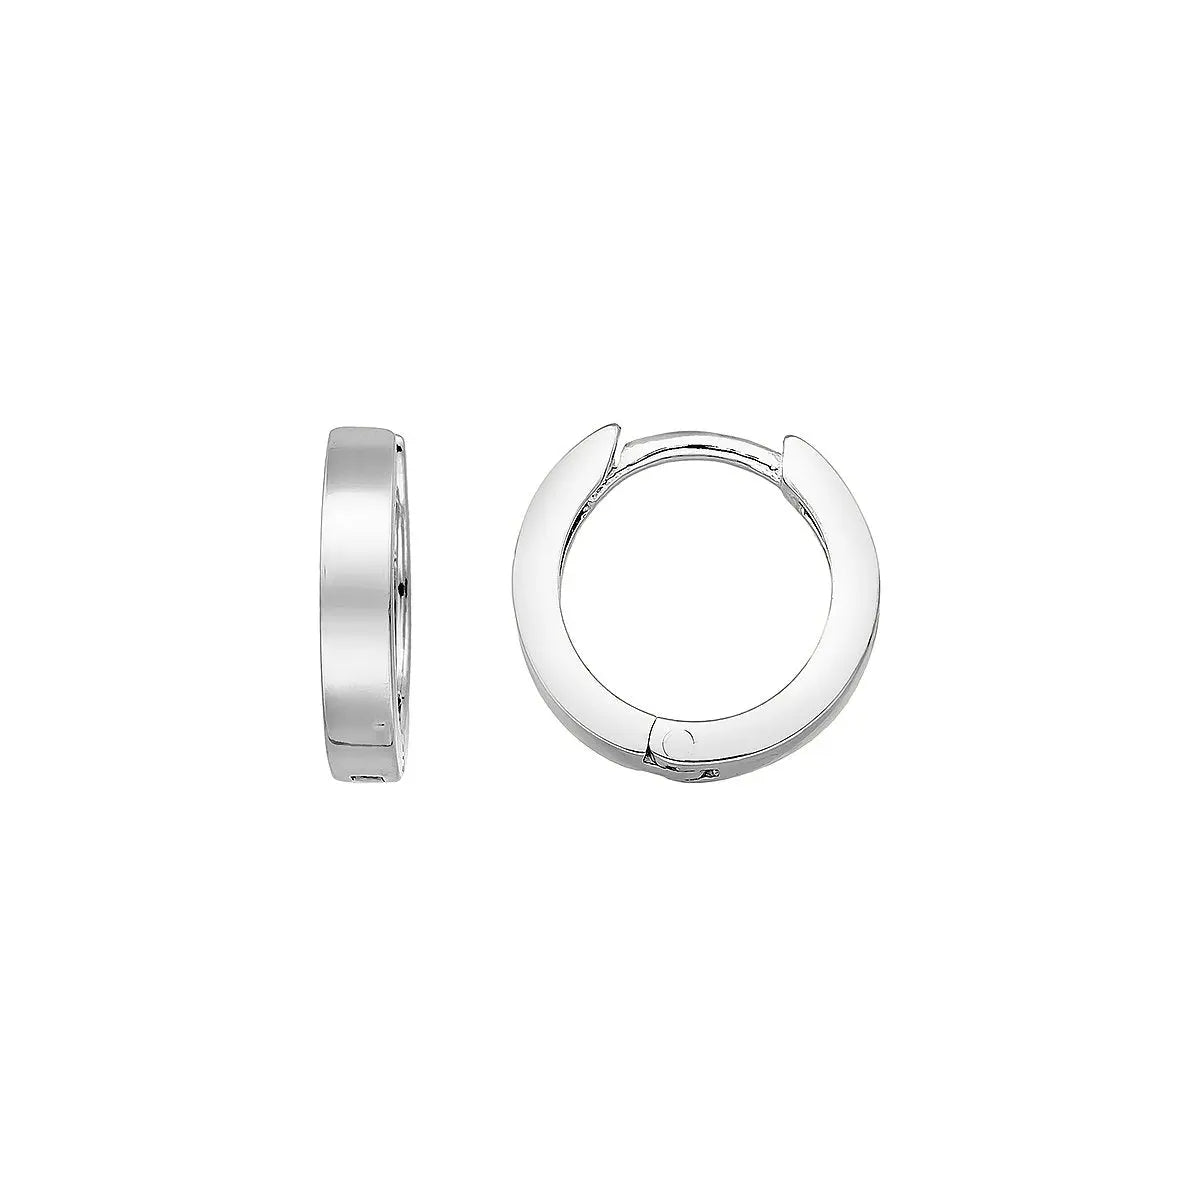 Simple creoler 11mm - Sølv fra Lush Lush Jewelry